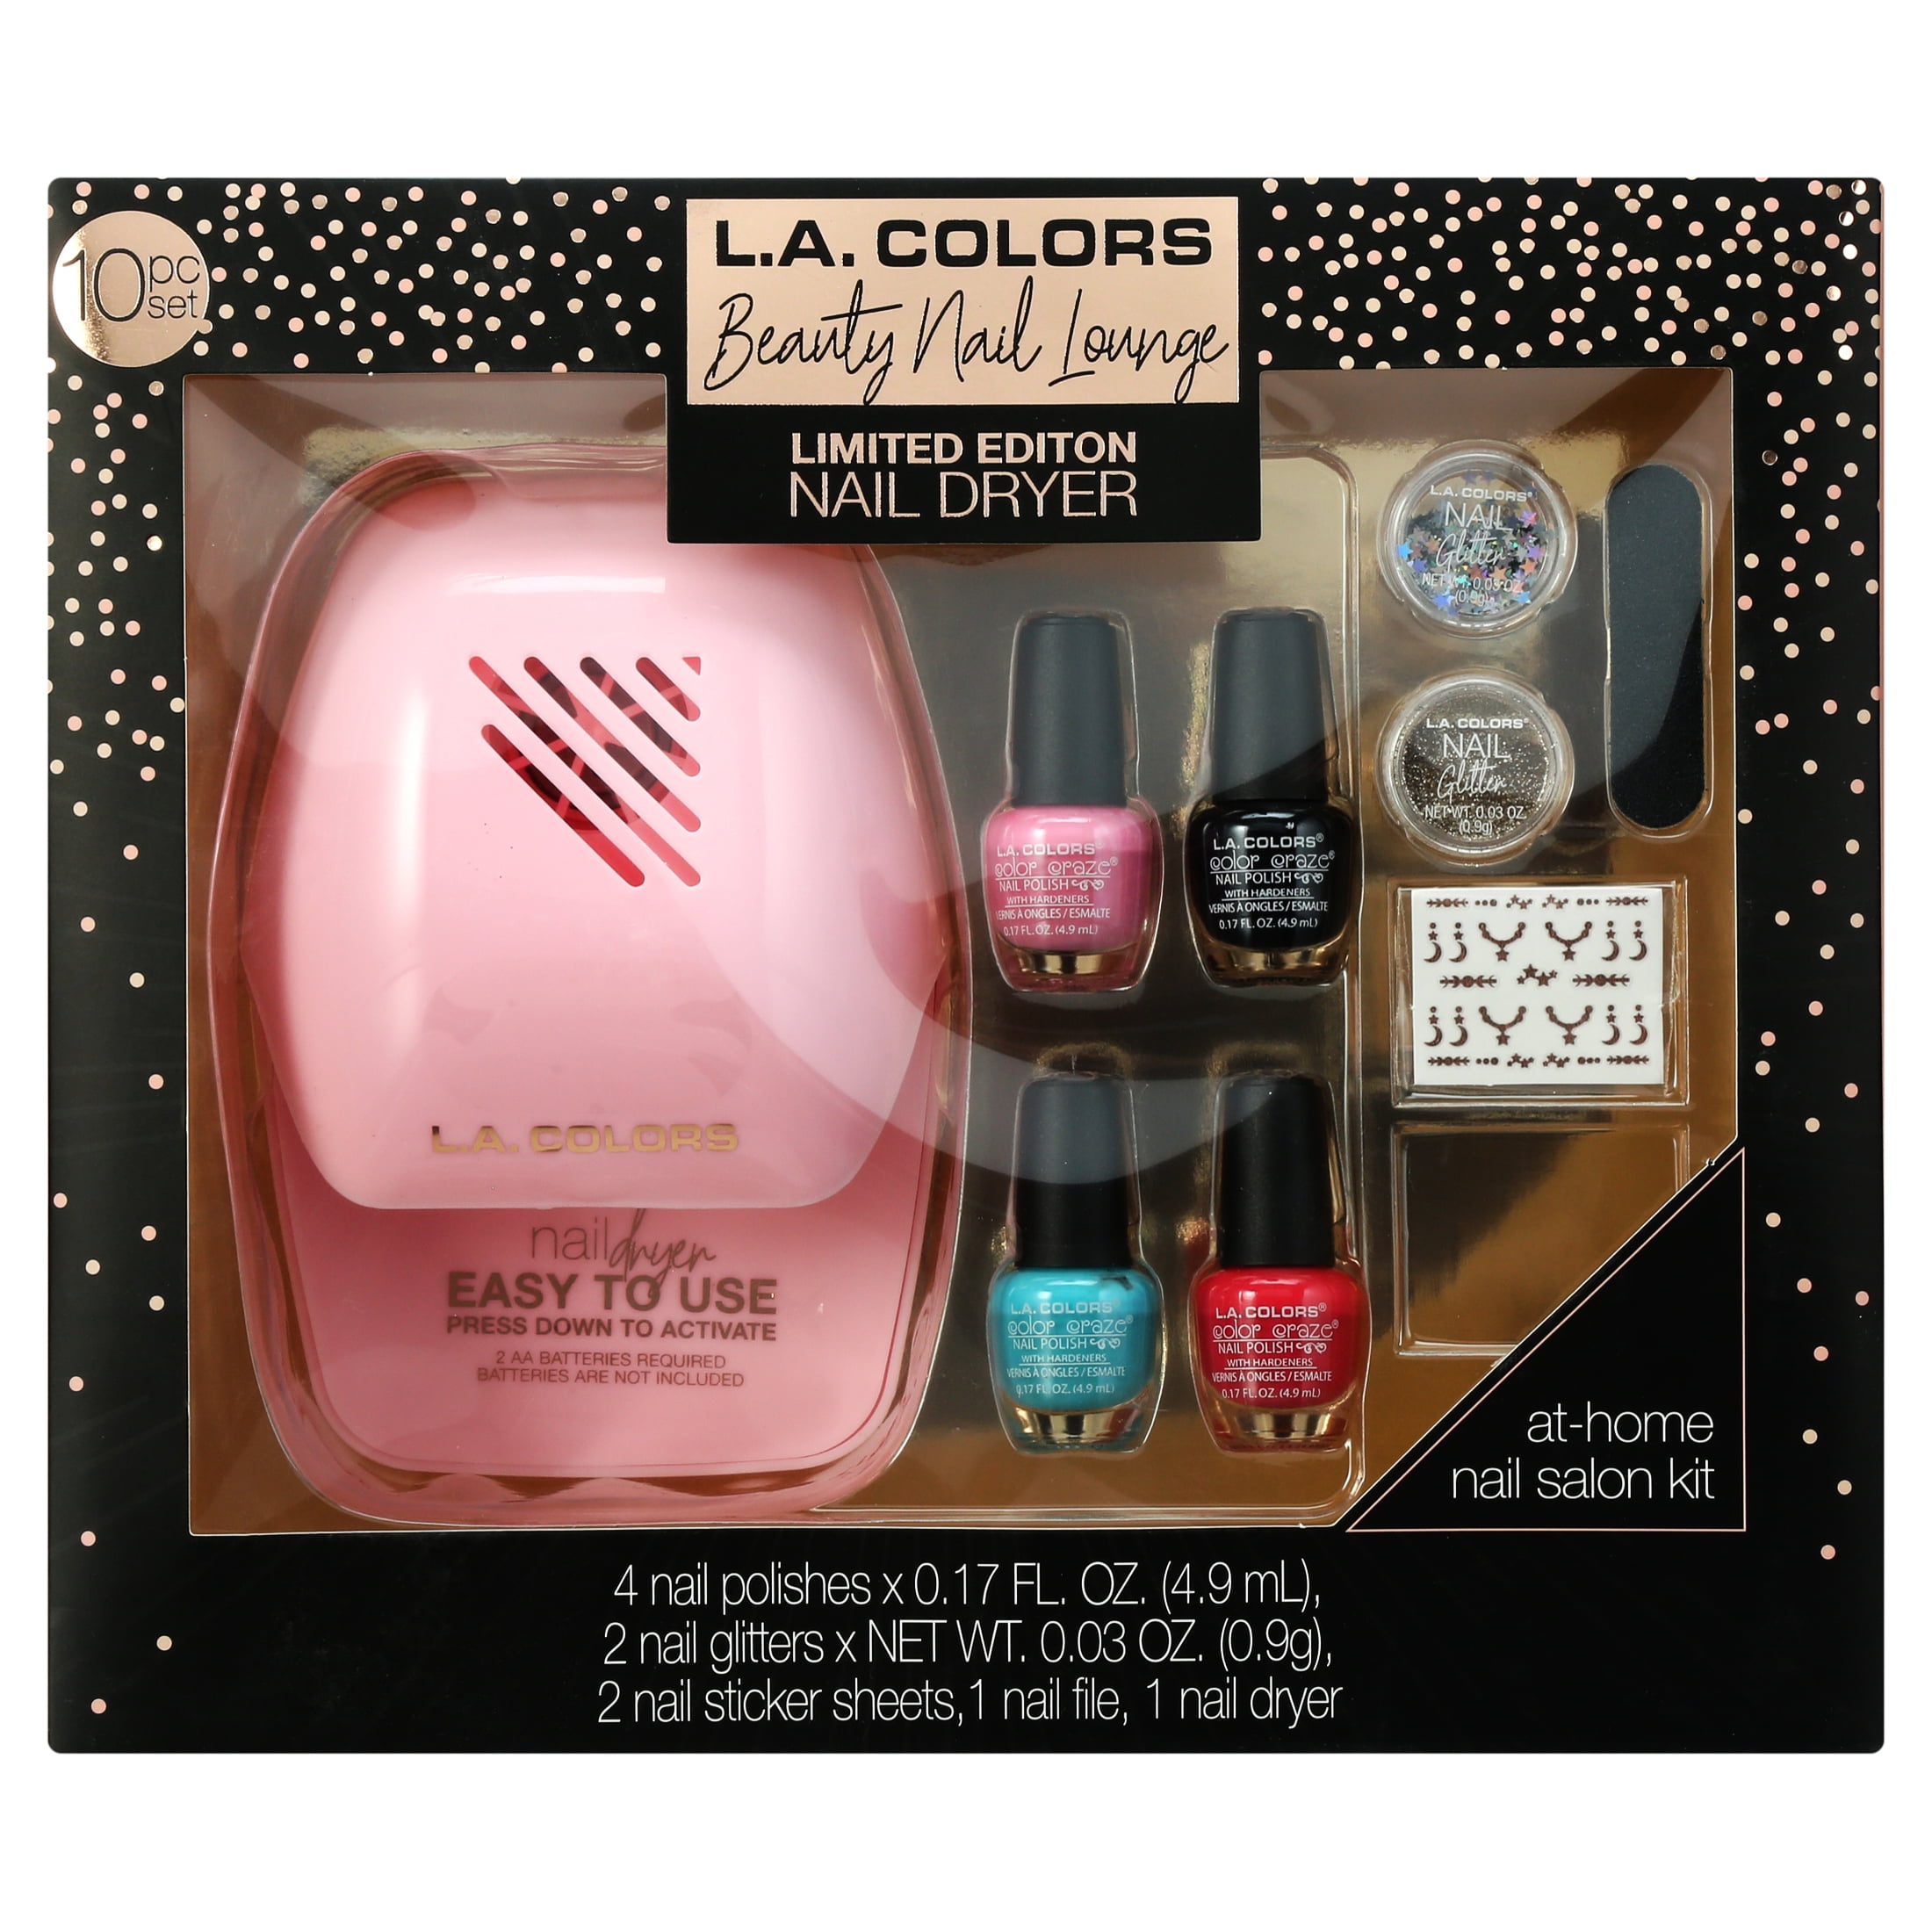 L.A. Colors 10-Piece Beauty Nail Lounge Gift Set